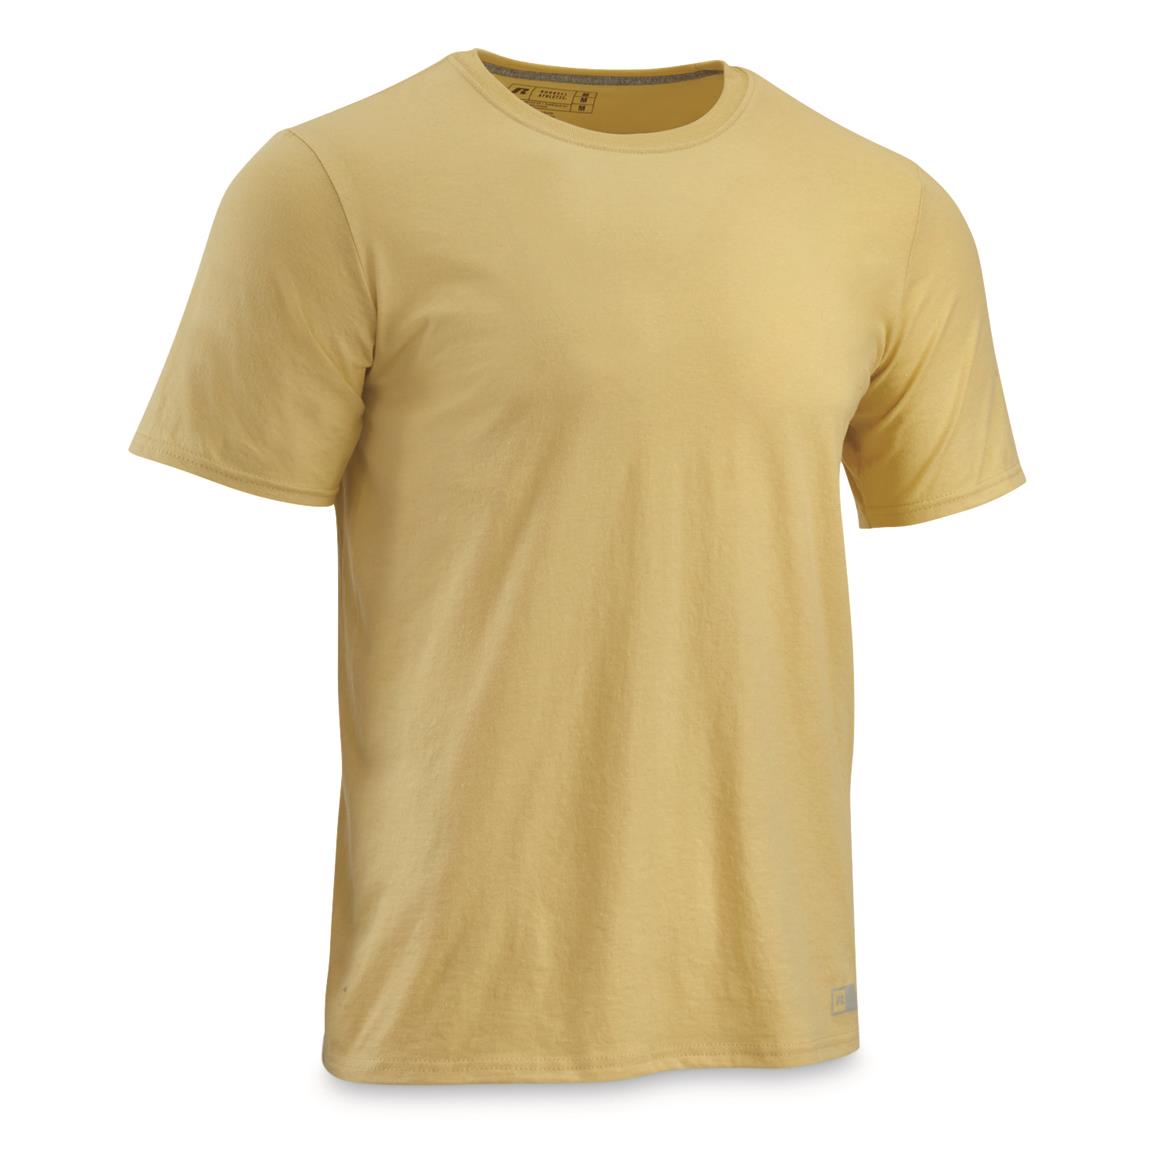 U.S. Military Surplus Cotton Blend Dri Power Mediumweight T-Shirts, 6 Pack, New, Gold